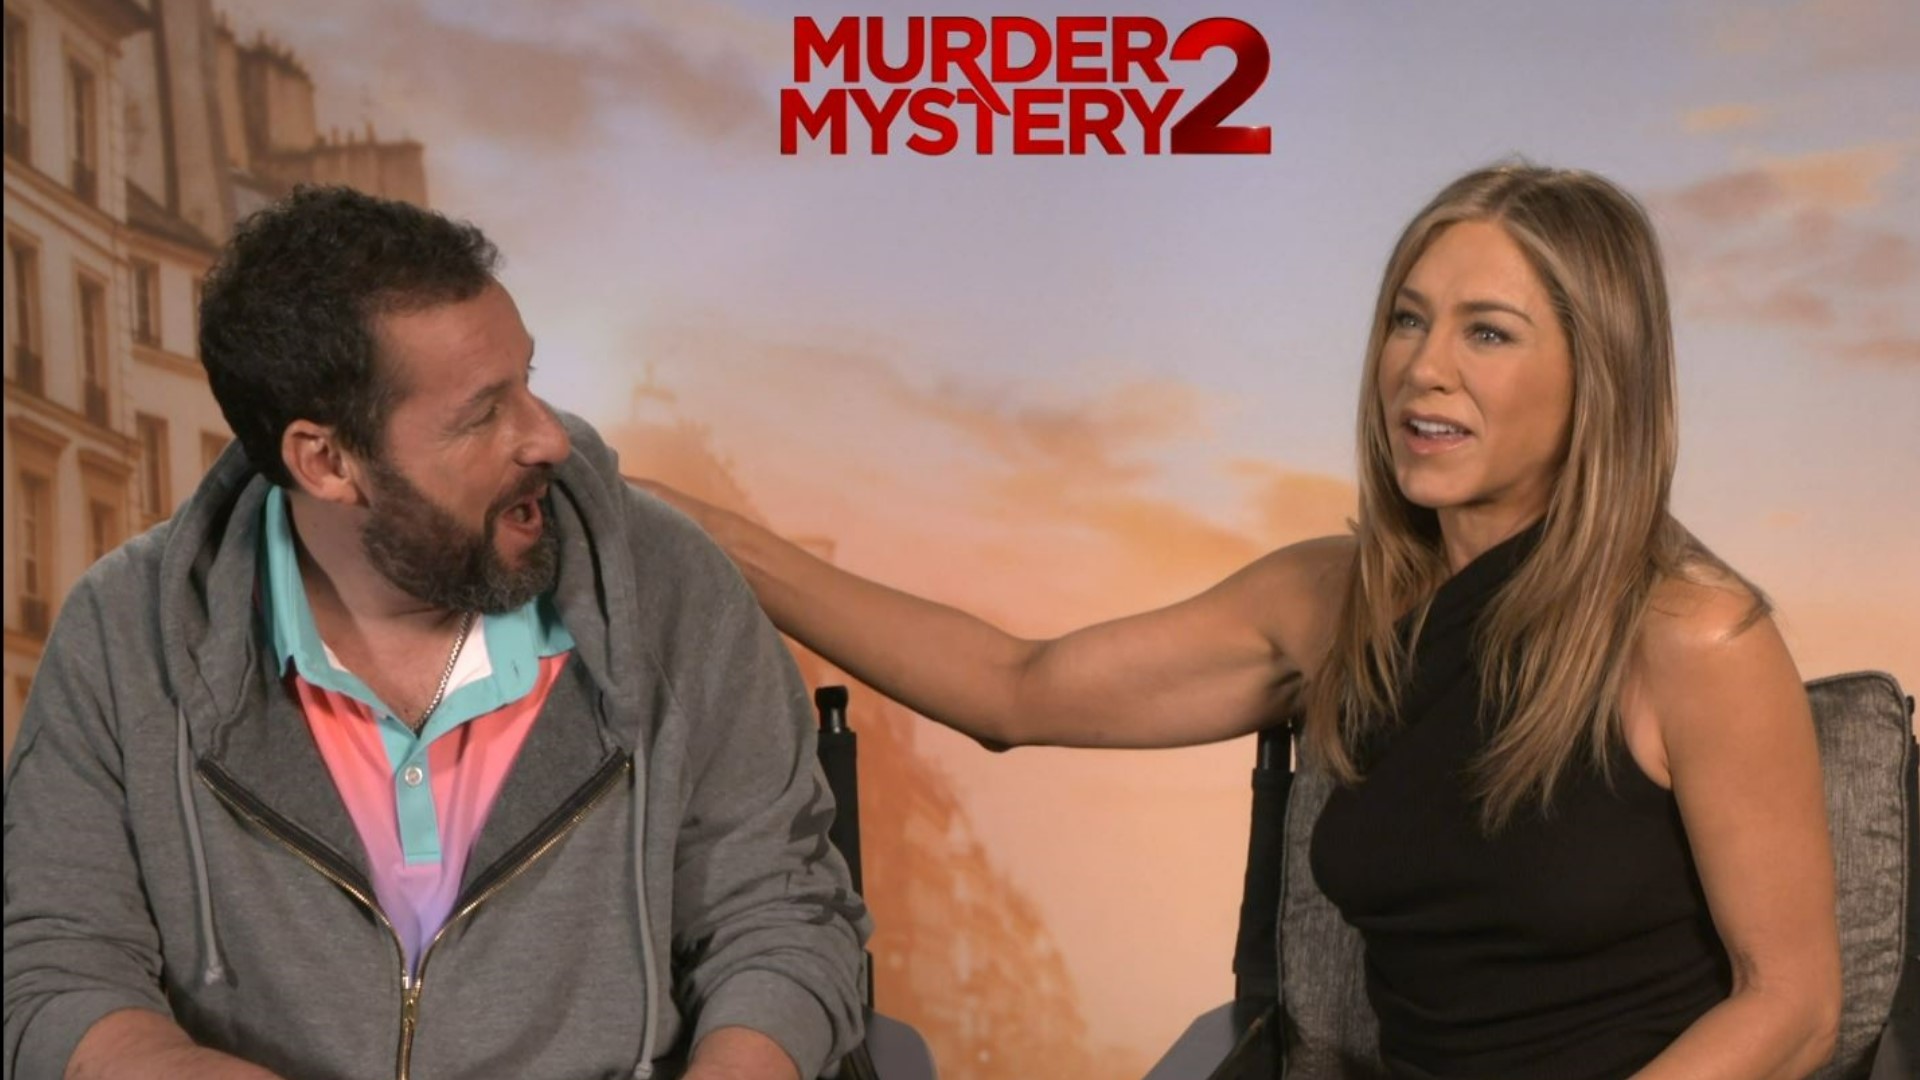 Murder Mystery 2 Trailer: Adam Sandler, Jennifer Aniston Return